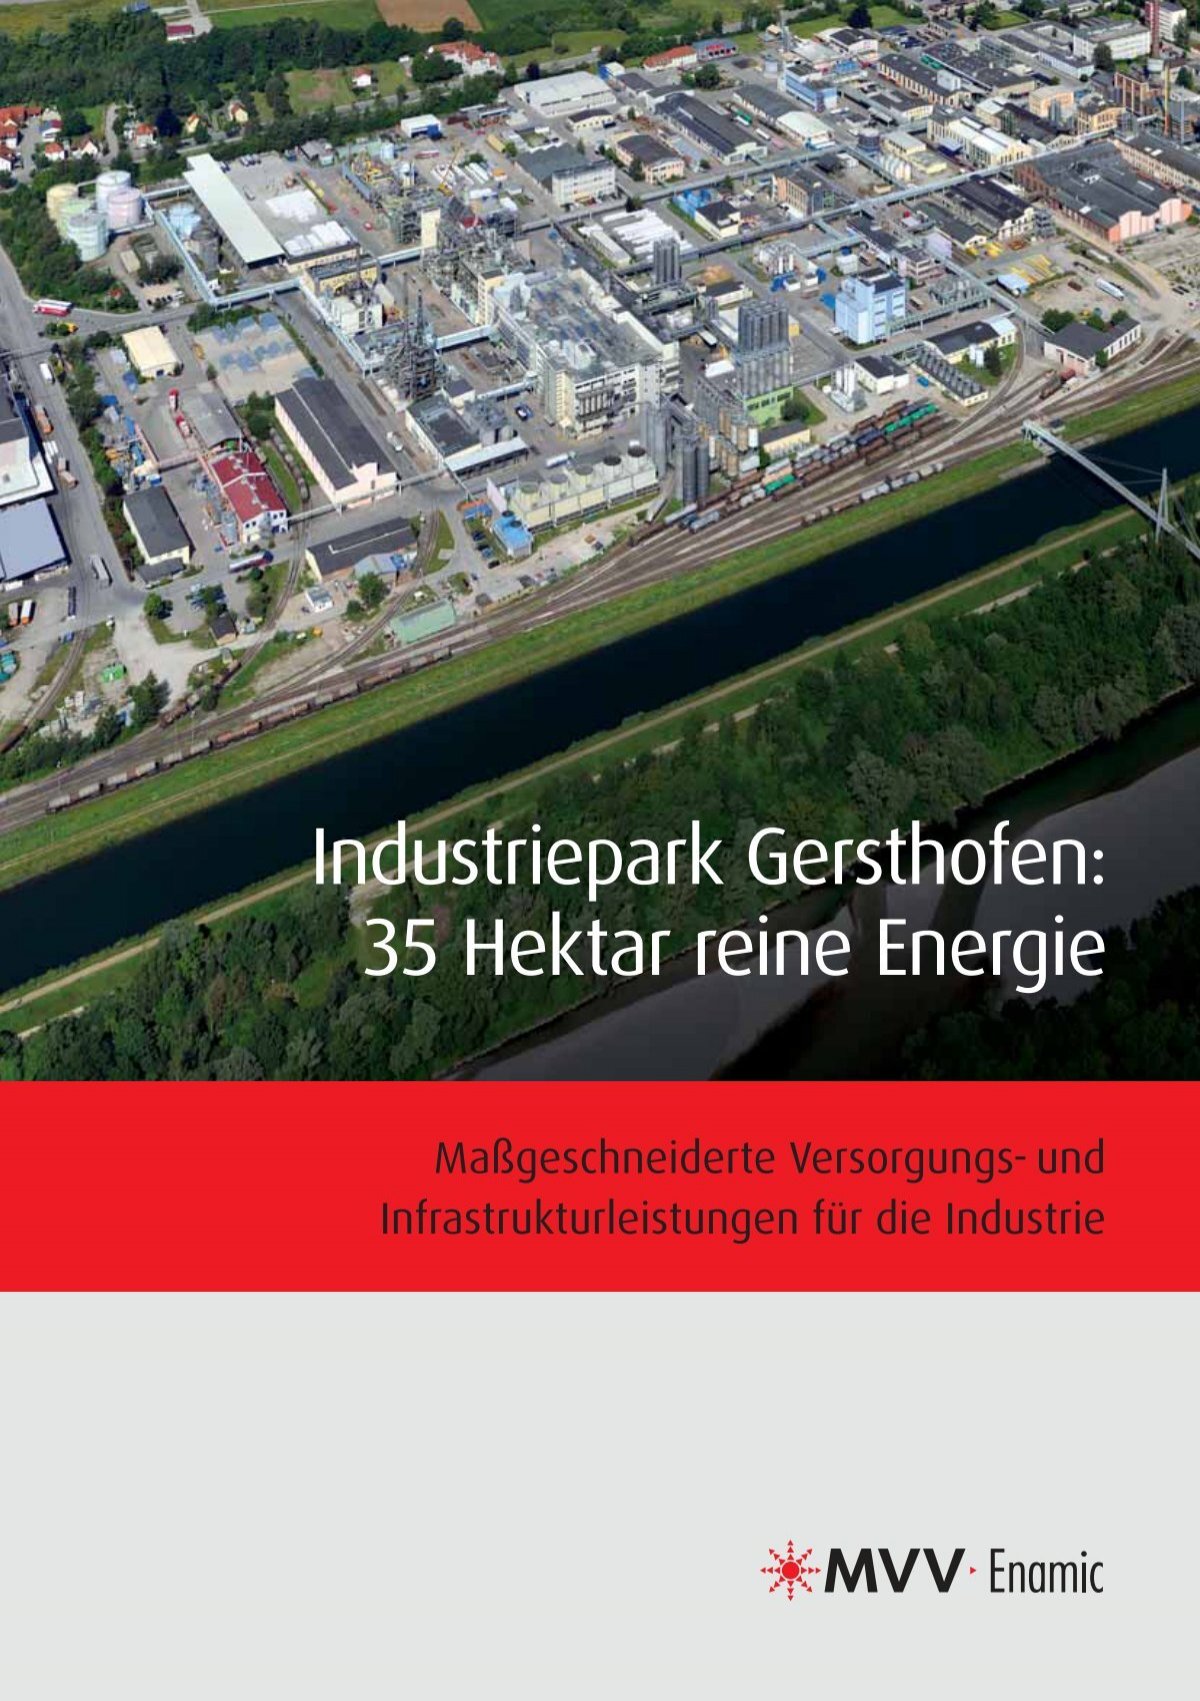 Industriepark Gersthofen: 35 Hektar reine Energie - MVV Energie AG